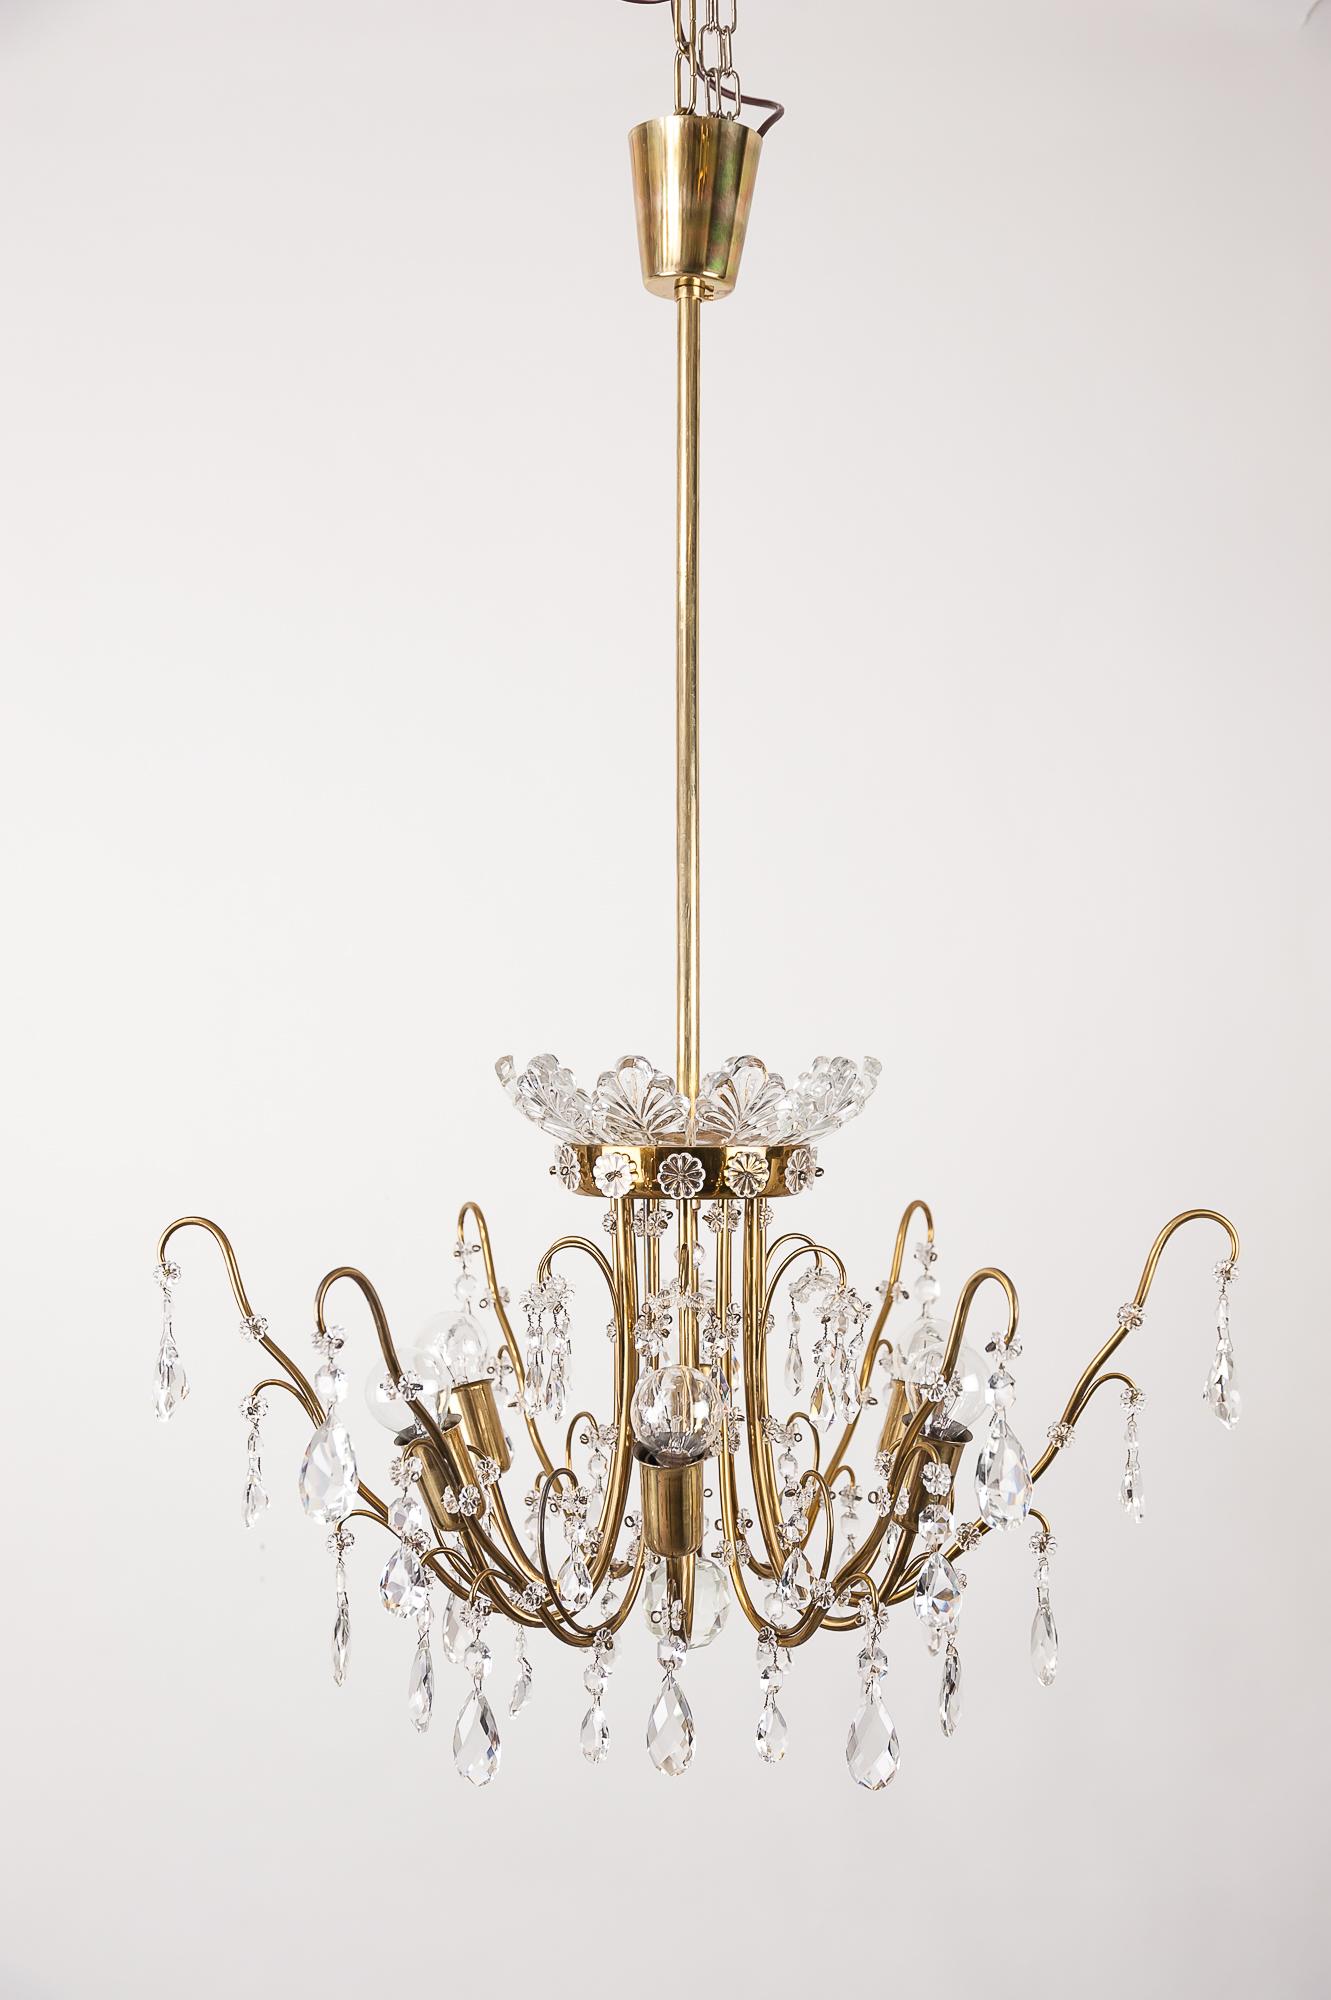 Lobmeyr crystal chandelier, 1950s
Original condition.